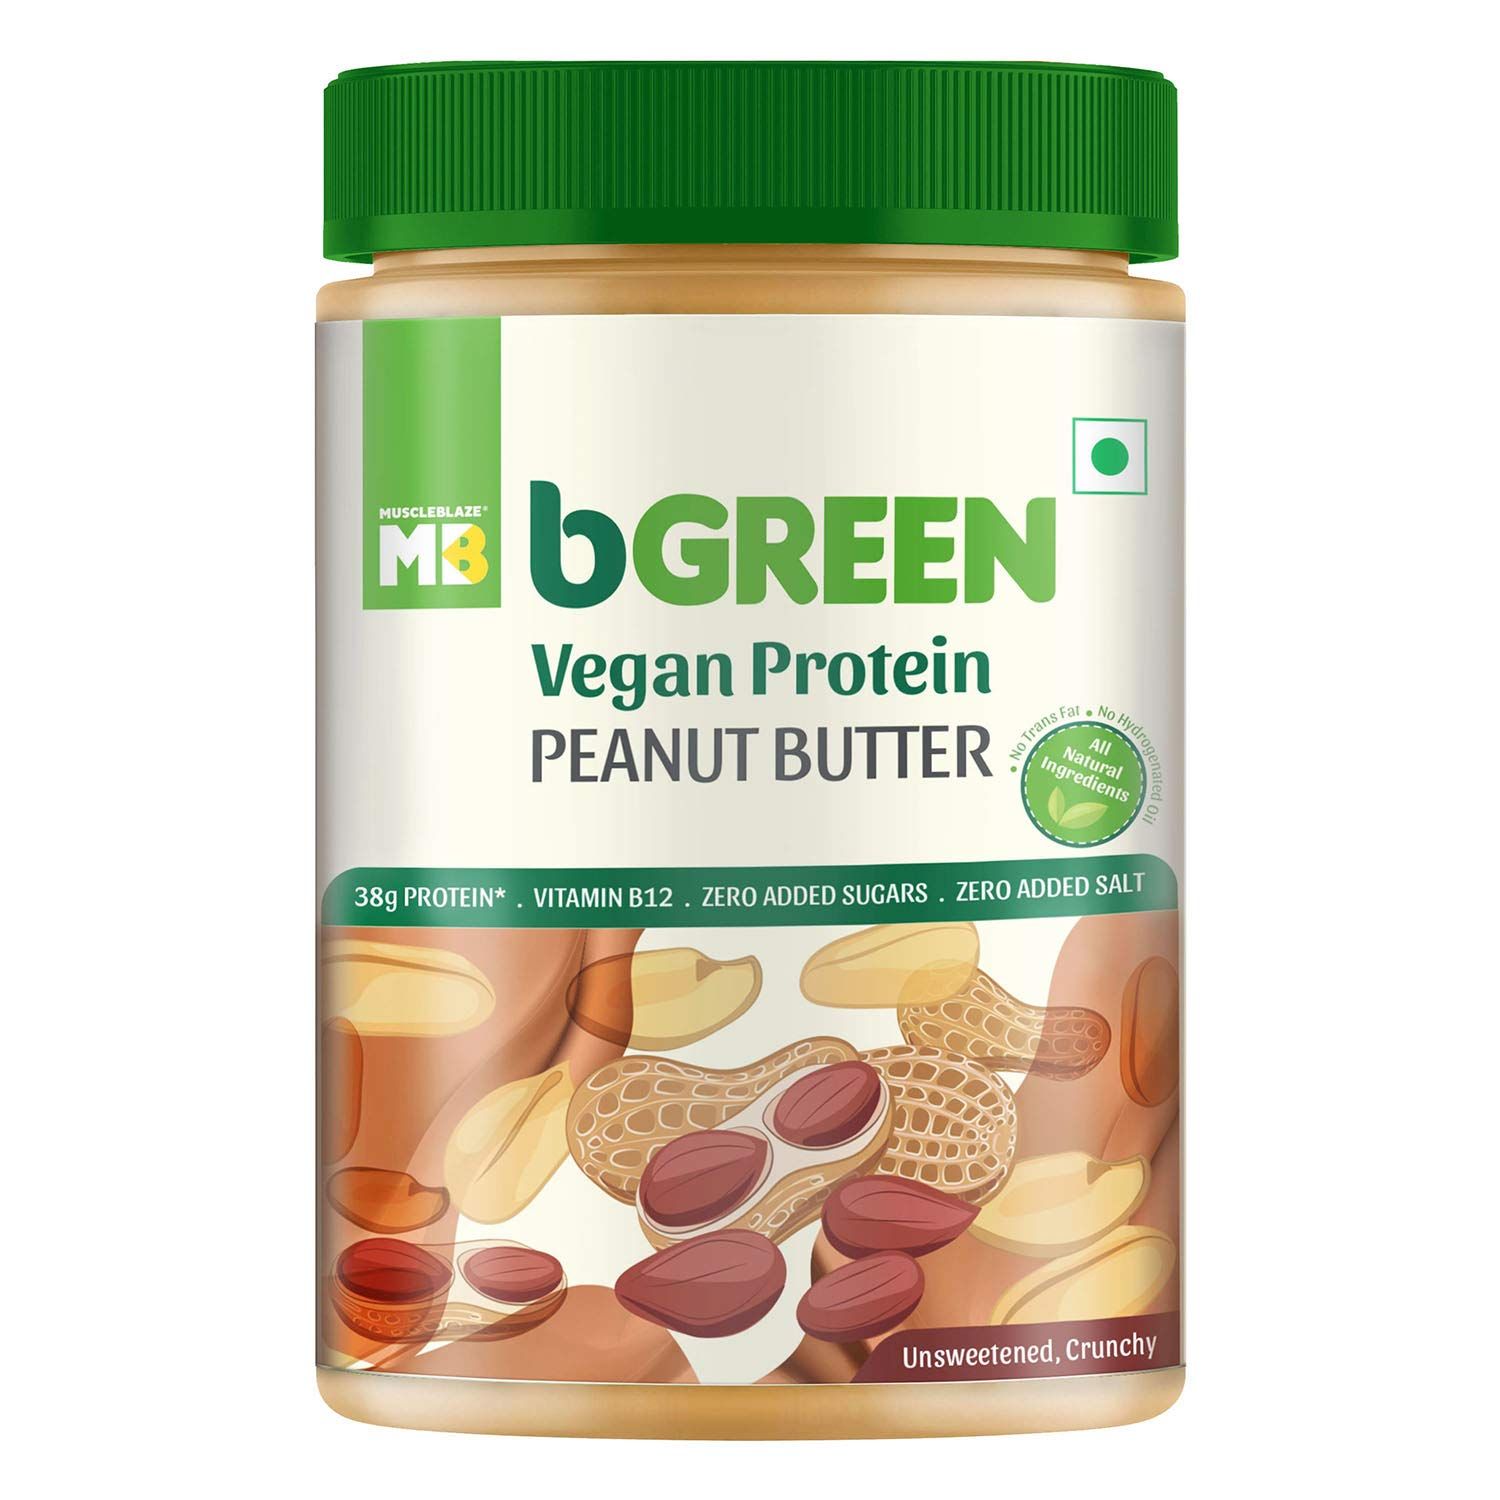 Bgreen Vegan Protein Peanut Butter Image